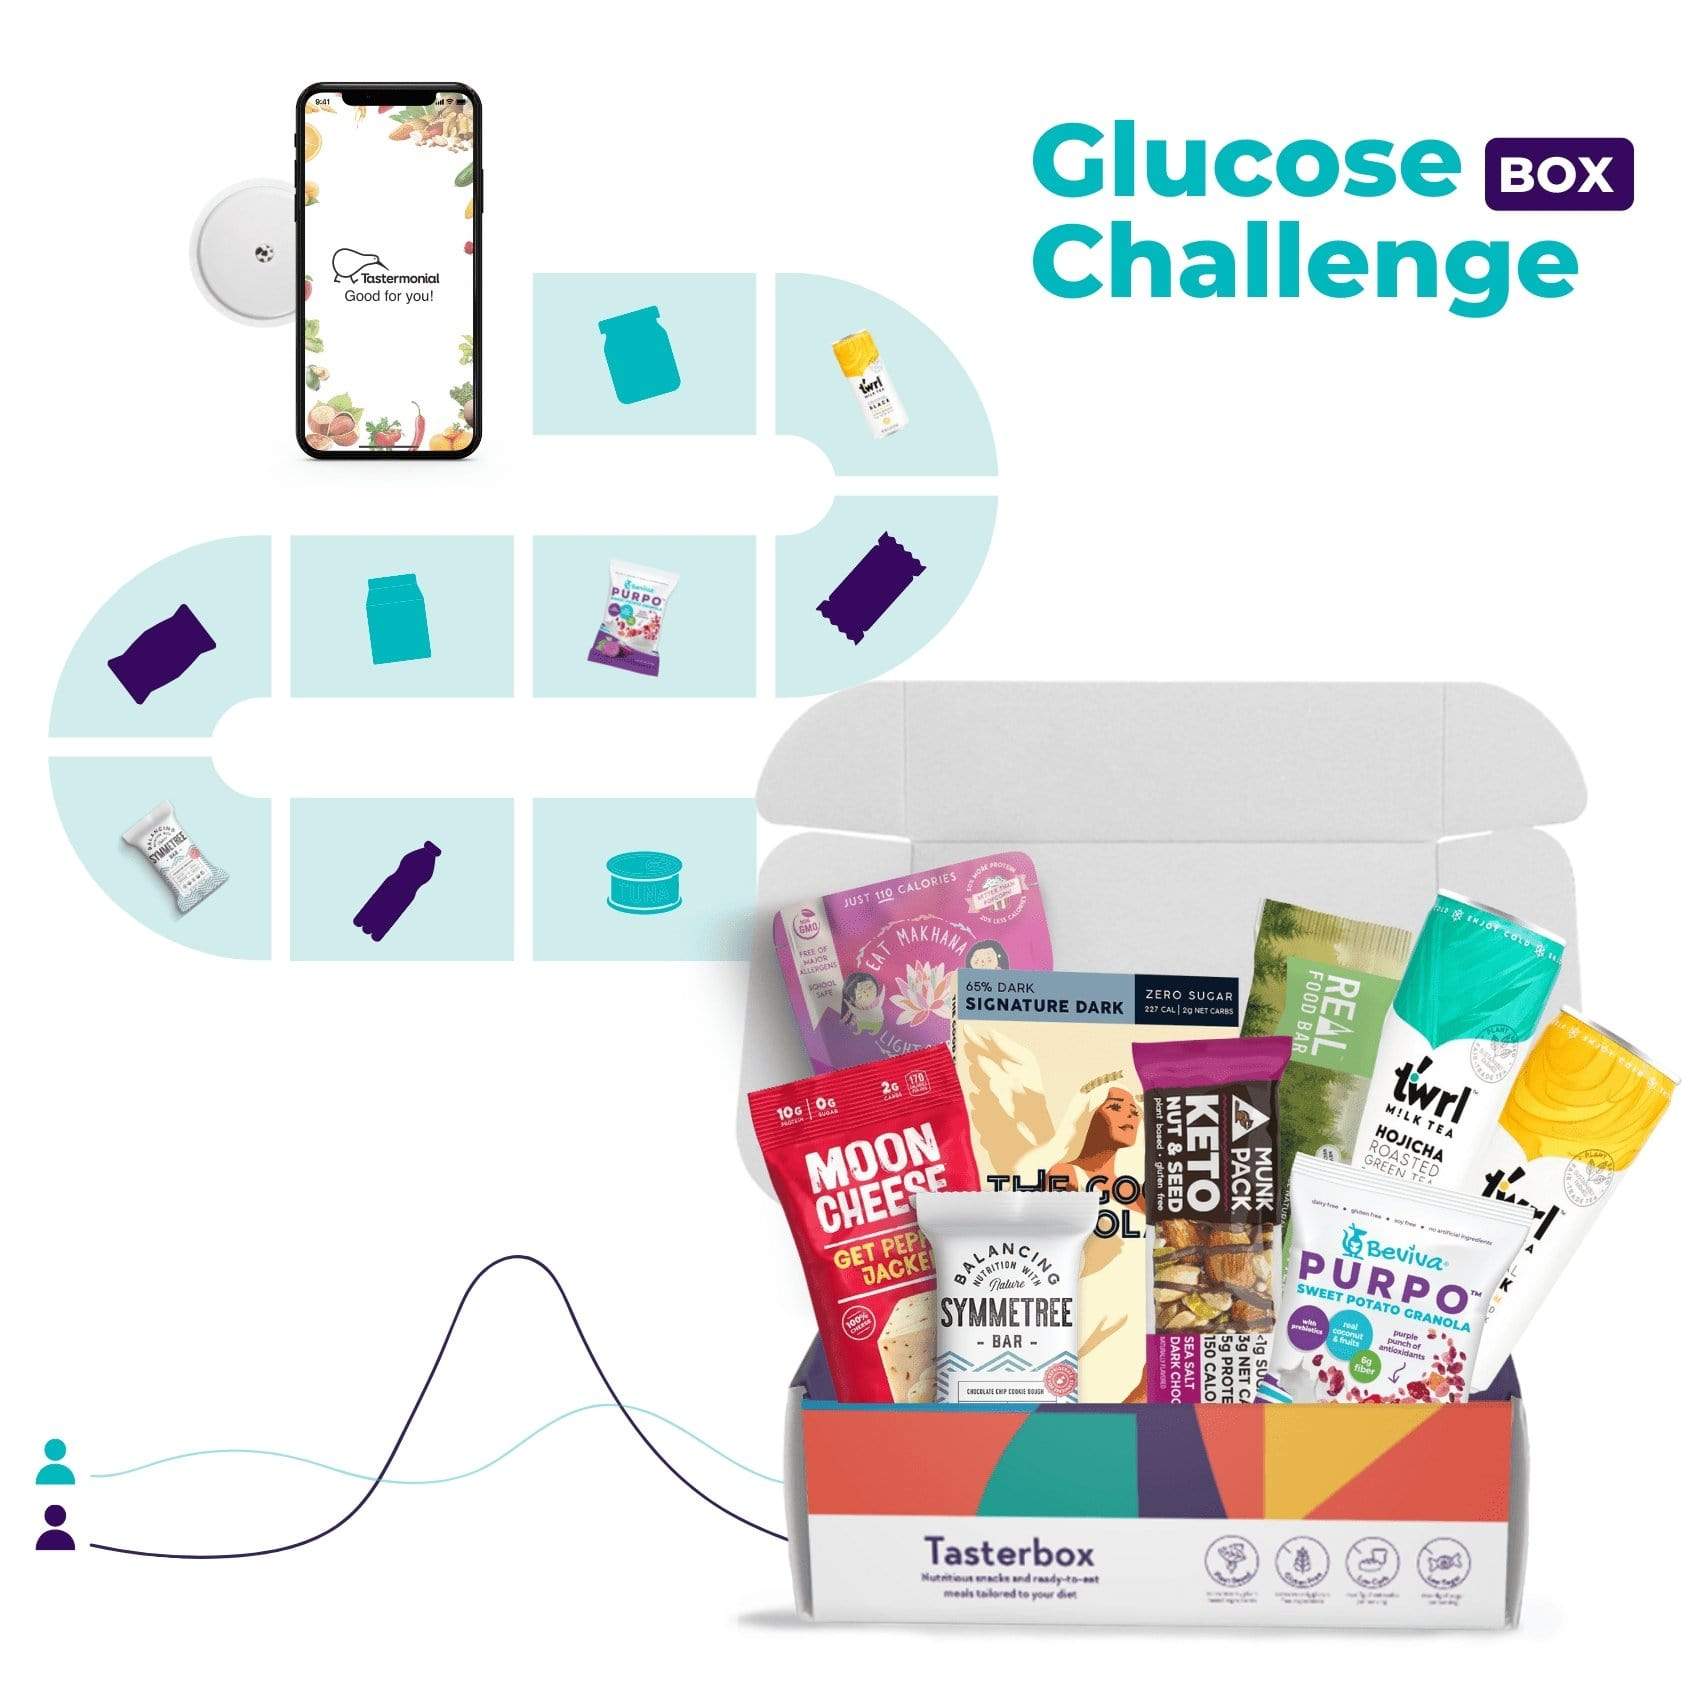 Glucose Challenge Tasterbox from Tastermonial